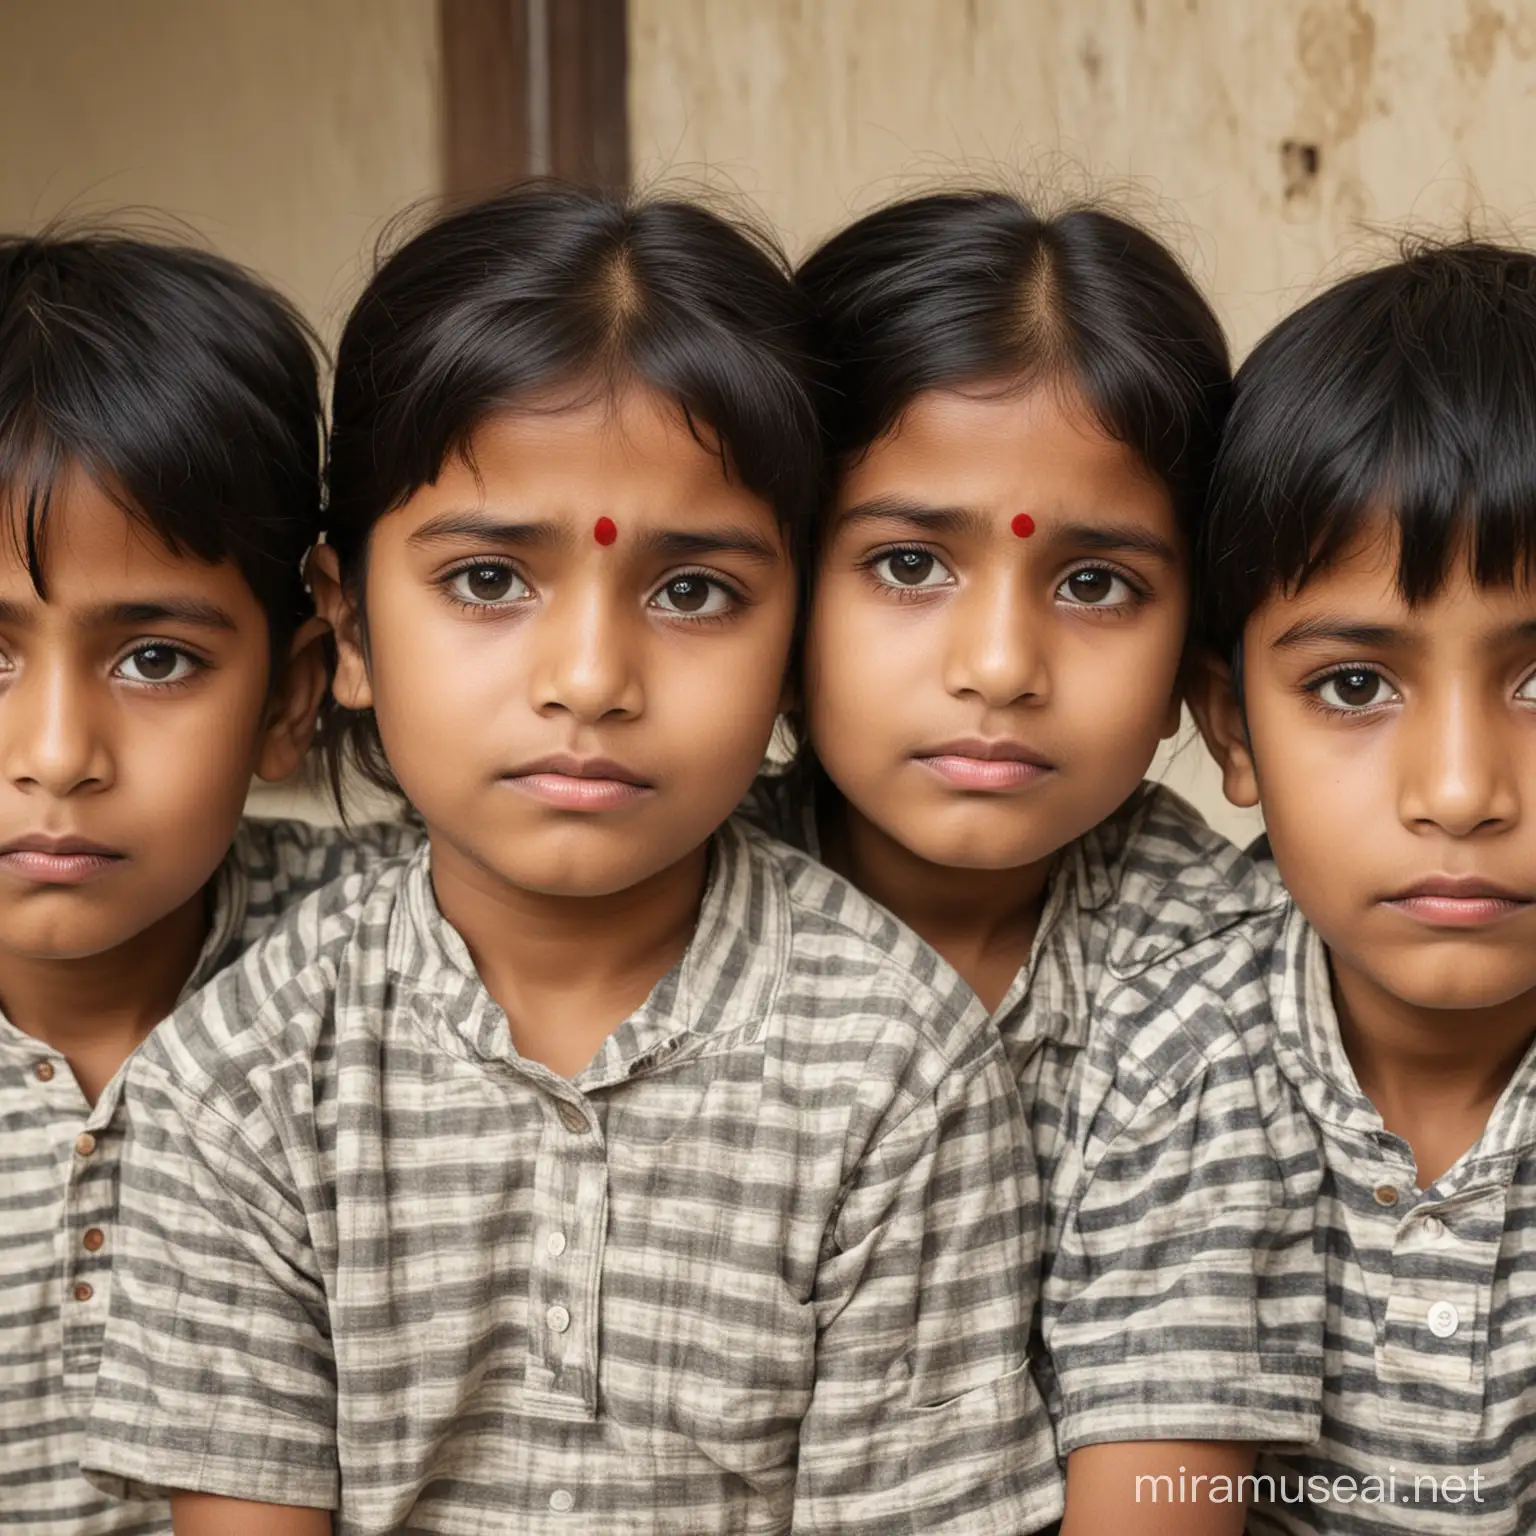 Group of Melancholic Indian Children